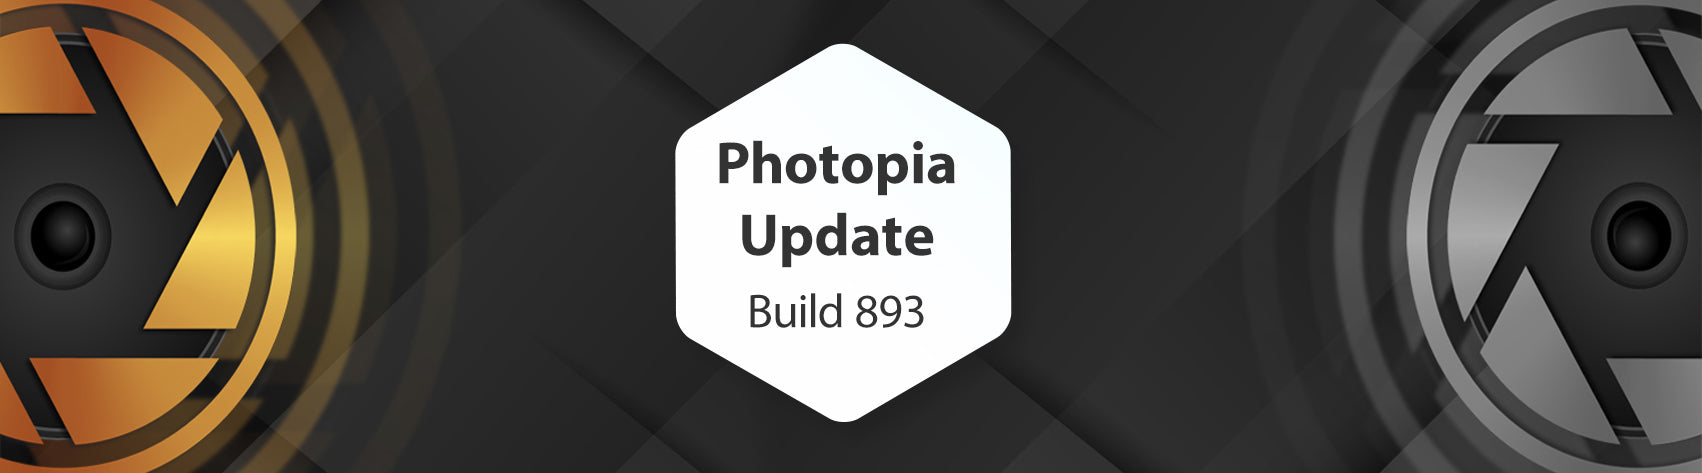 Photopia Update - Build 893